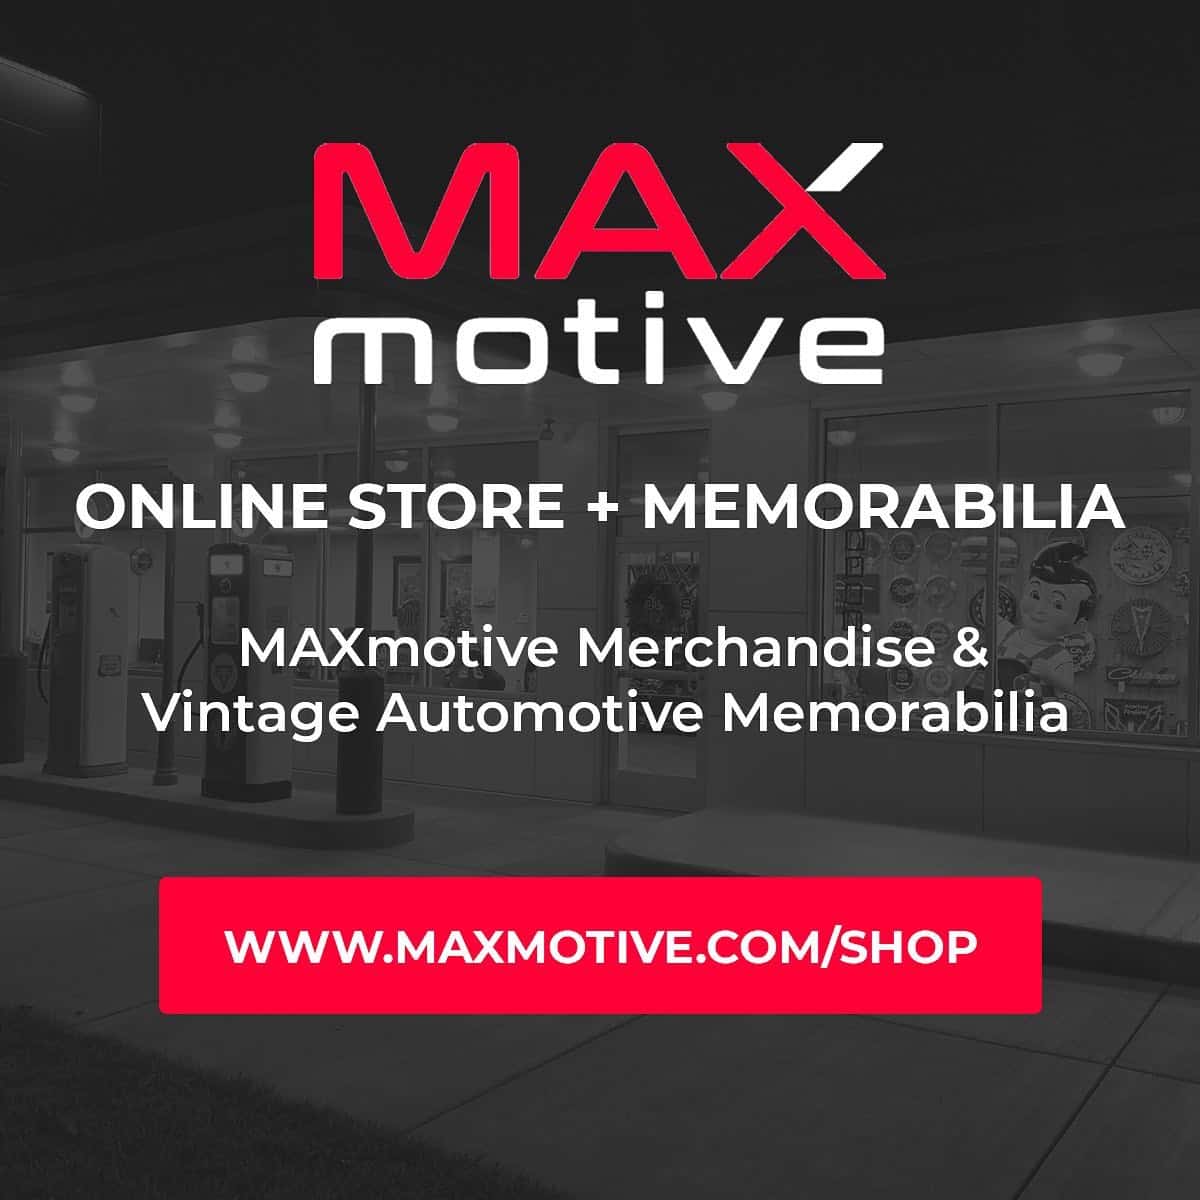 Maxmotive Online Store + Memorabilia